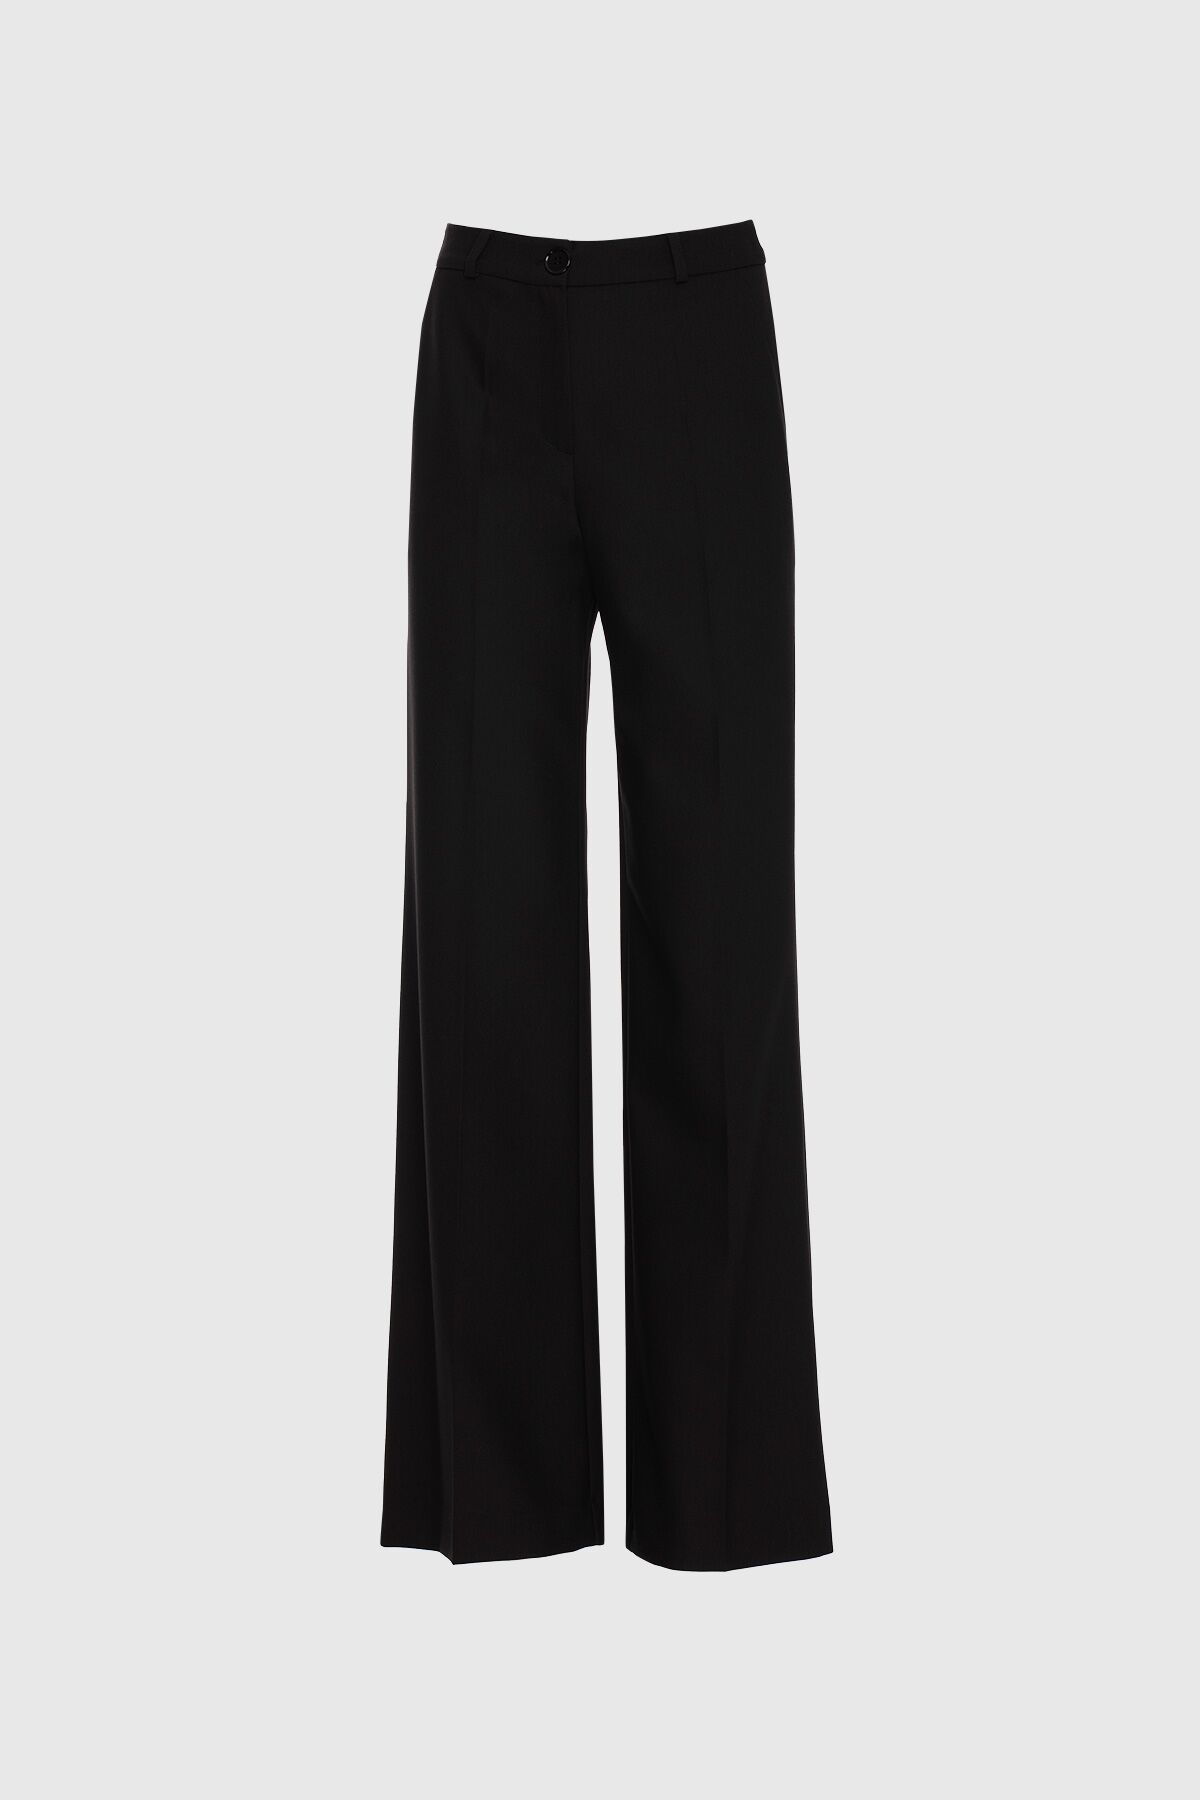 KIWE - Single Button High Waist Black Palazzo Trousers